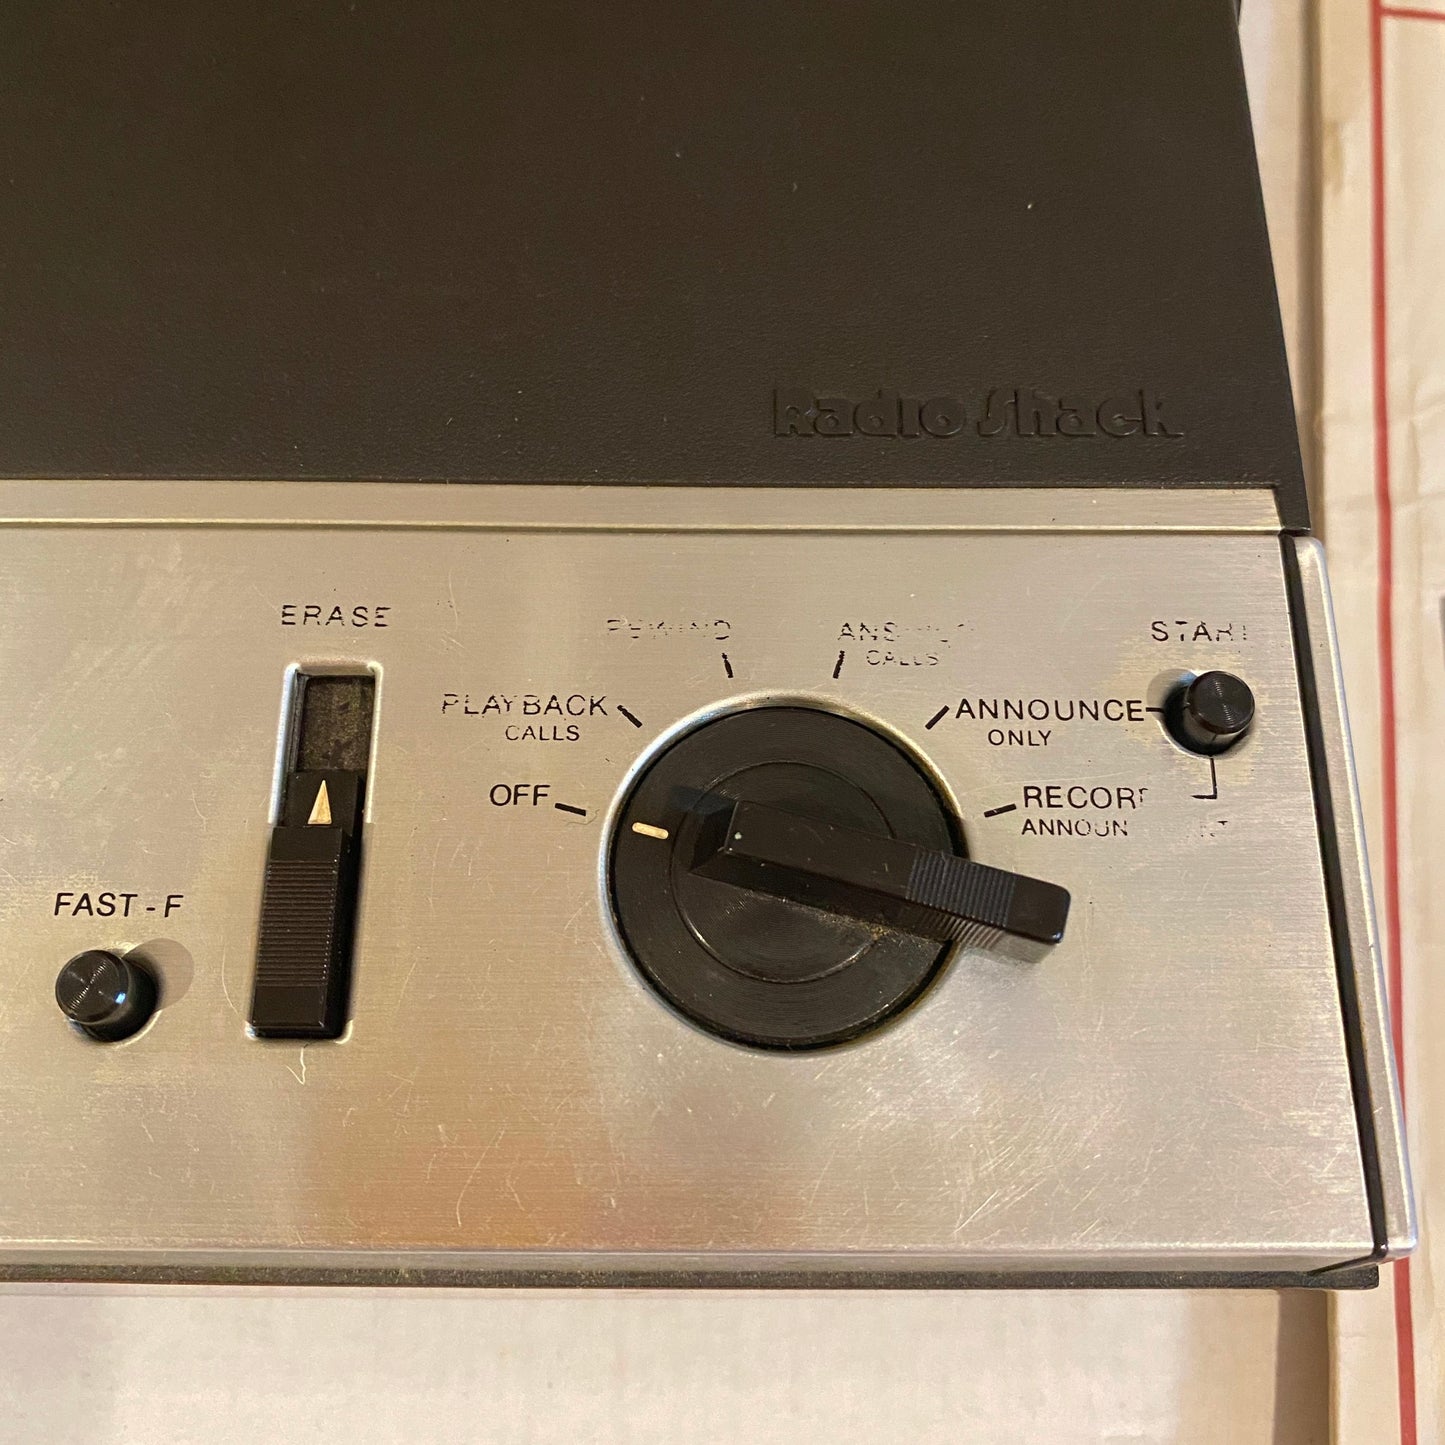 Vintage Radio Shack DuoPhone Analog Answering Machine - TAD-111A